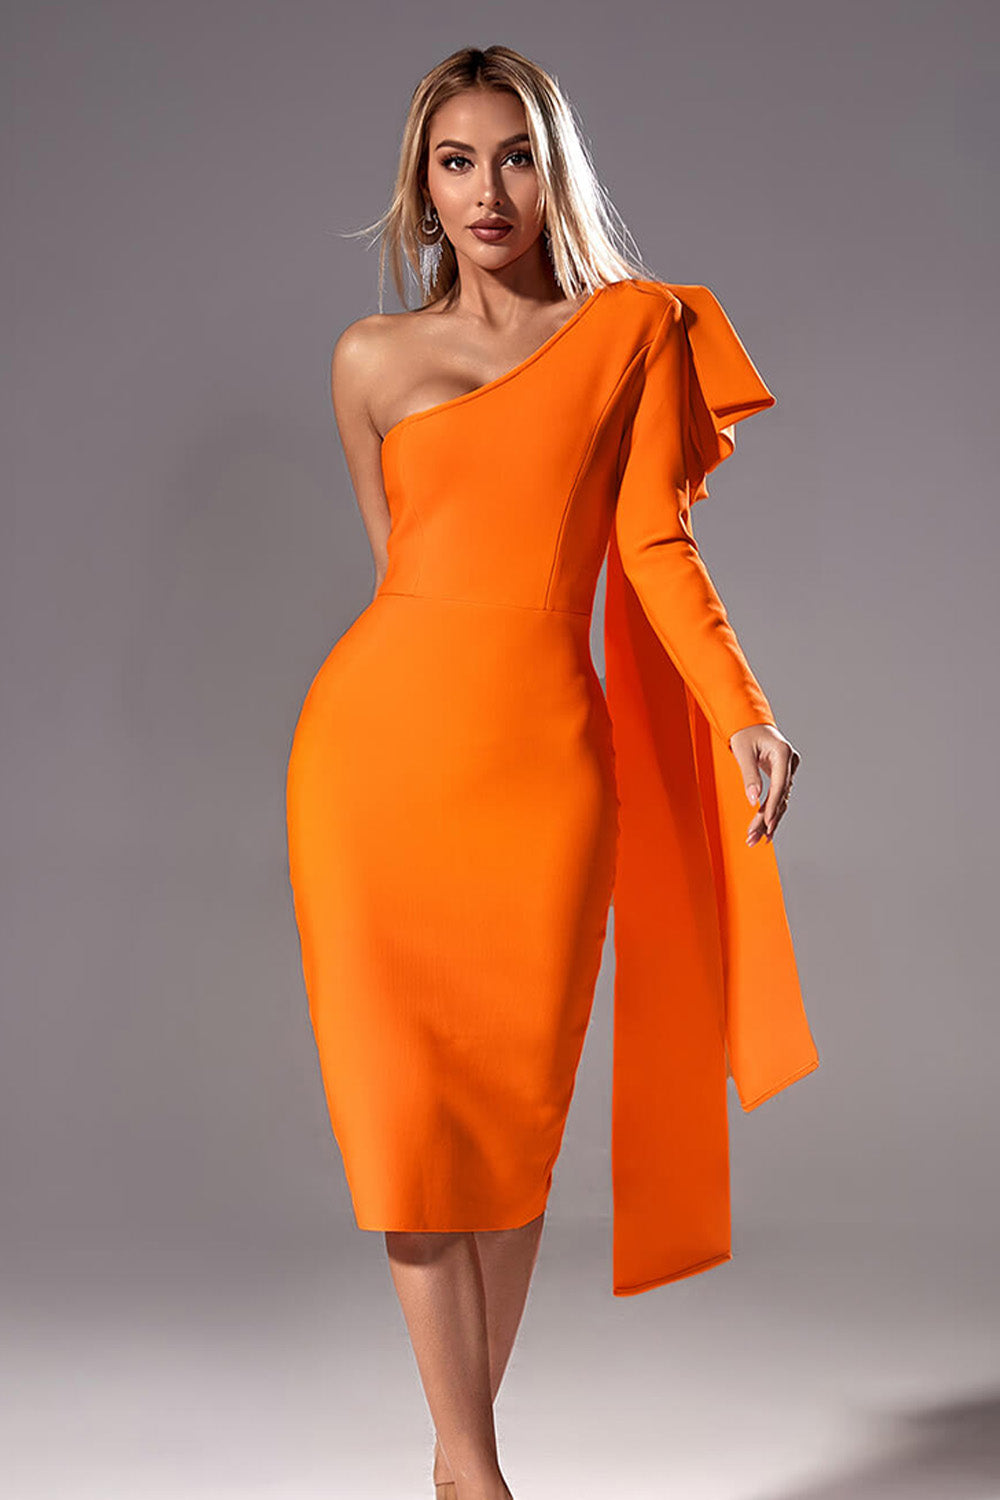 orange bandage dress, orange bodycon dress, orange cocktail dress, bandage dress for women, midi bandage dress, long sleeve bandage dress, one shoulder bandage dress, event dress, party dress, fancy bandage dress